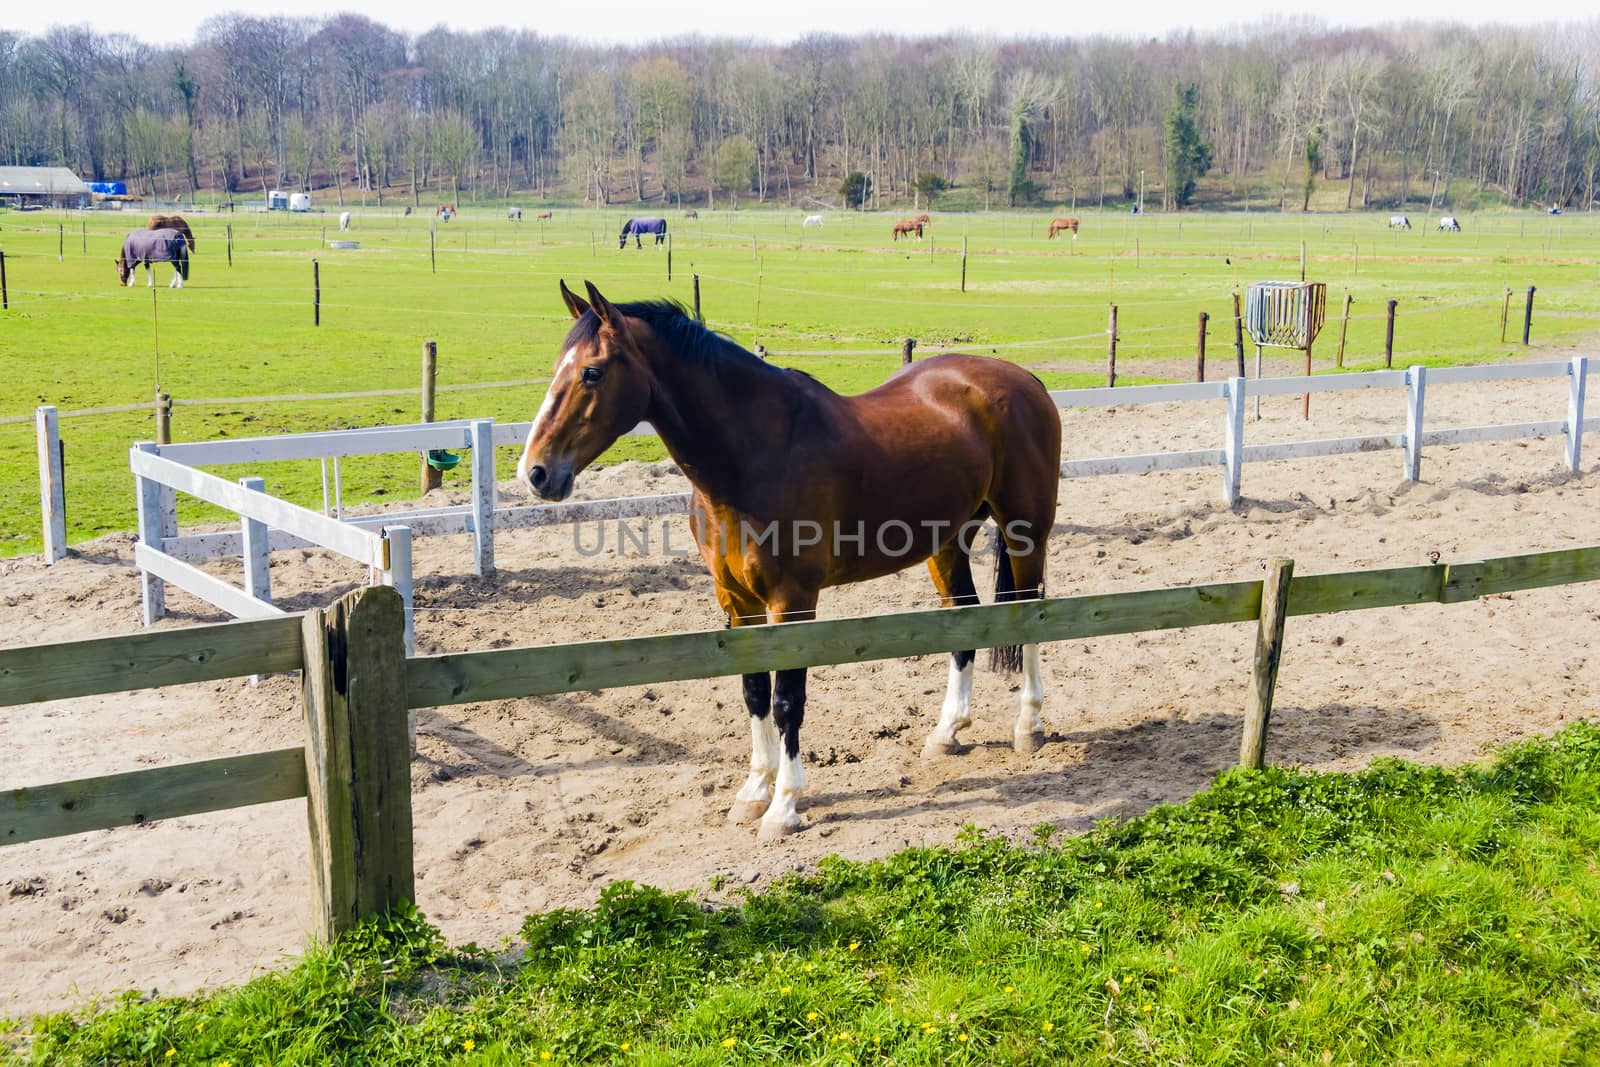 Beautiful bay horse behind a farm fence